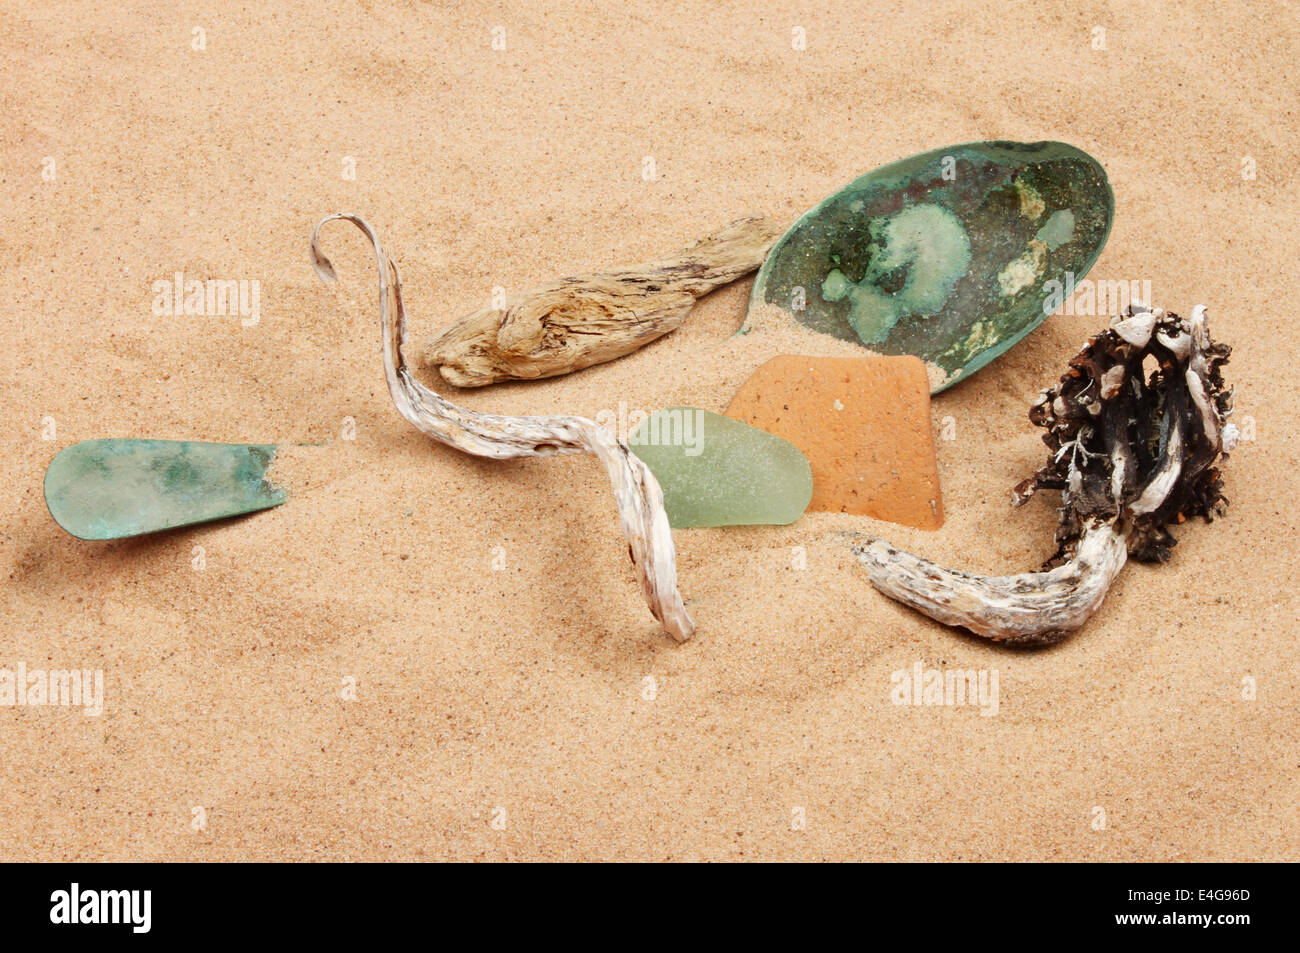 Still life of beach debris in sand Stock Photo